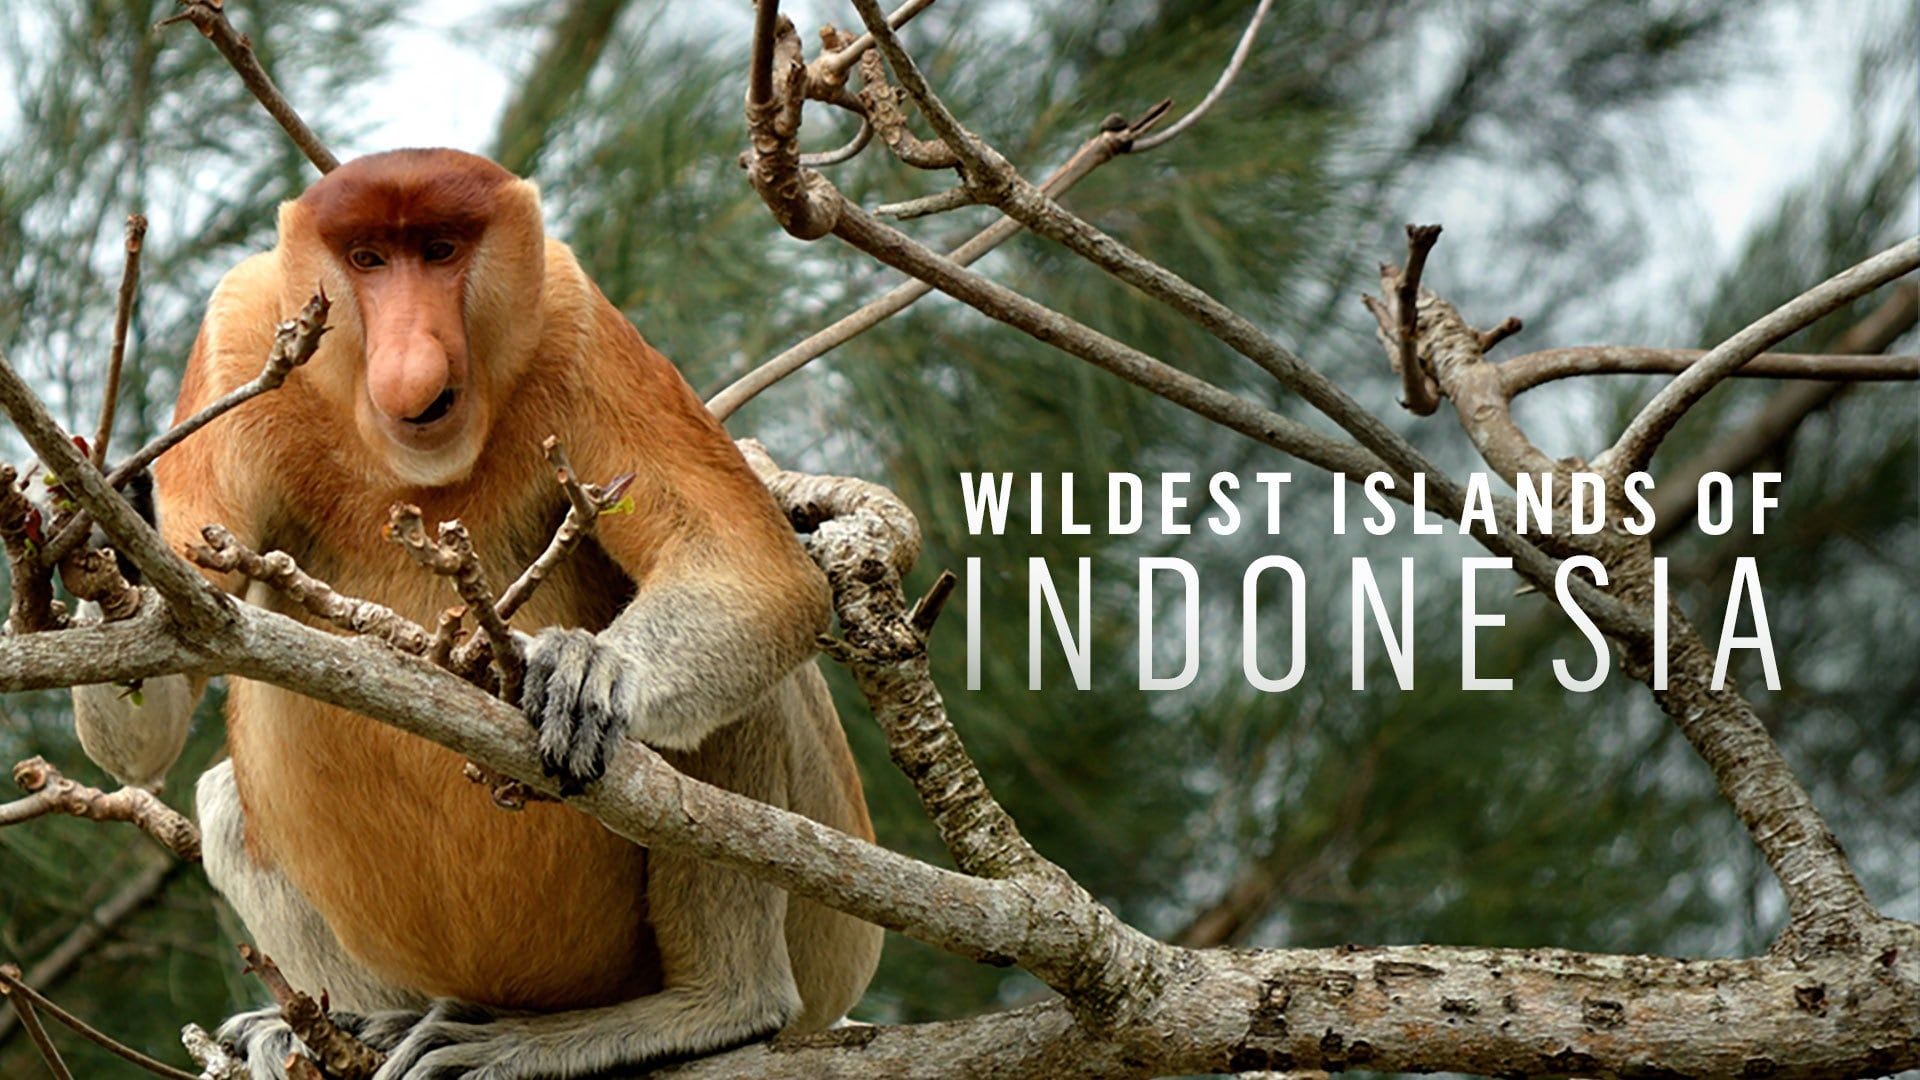 Wildest Islands of Indonesia background